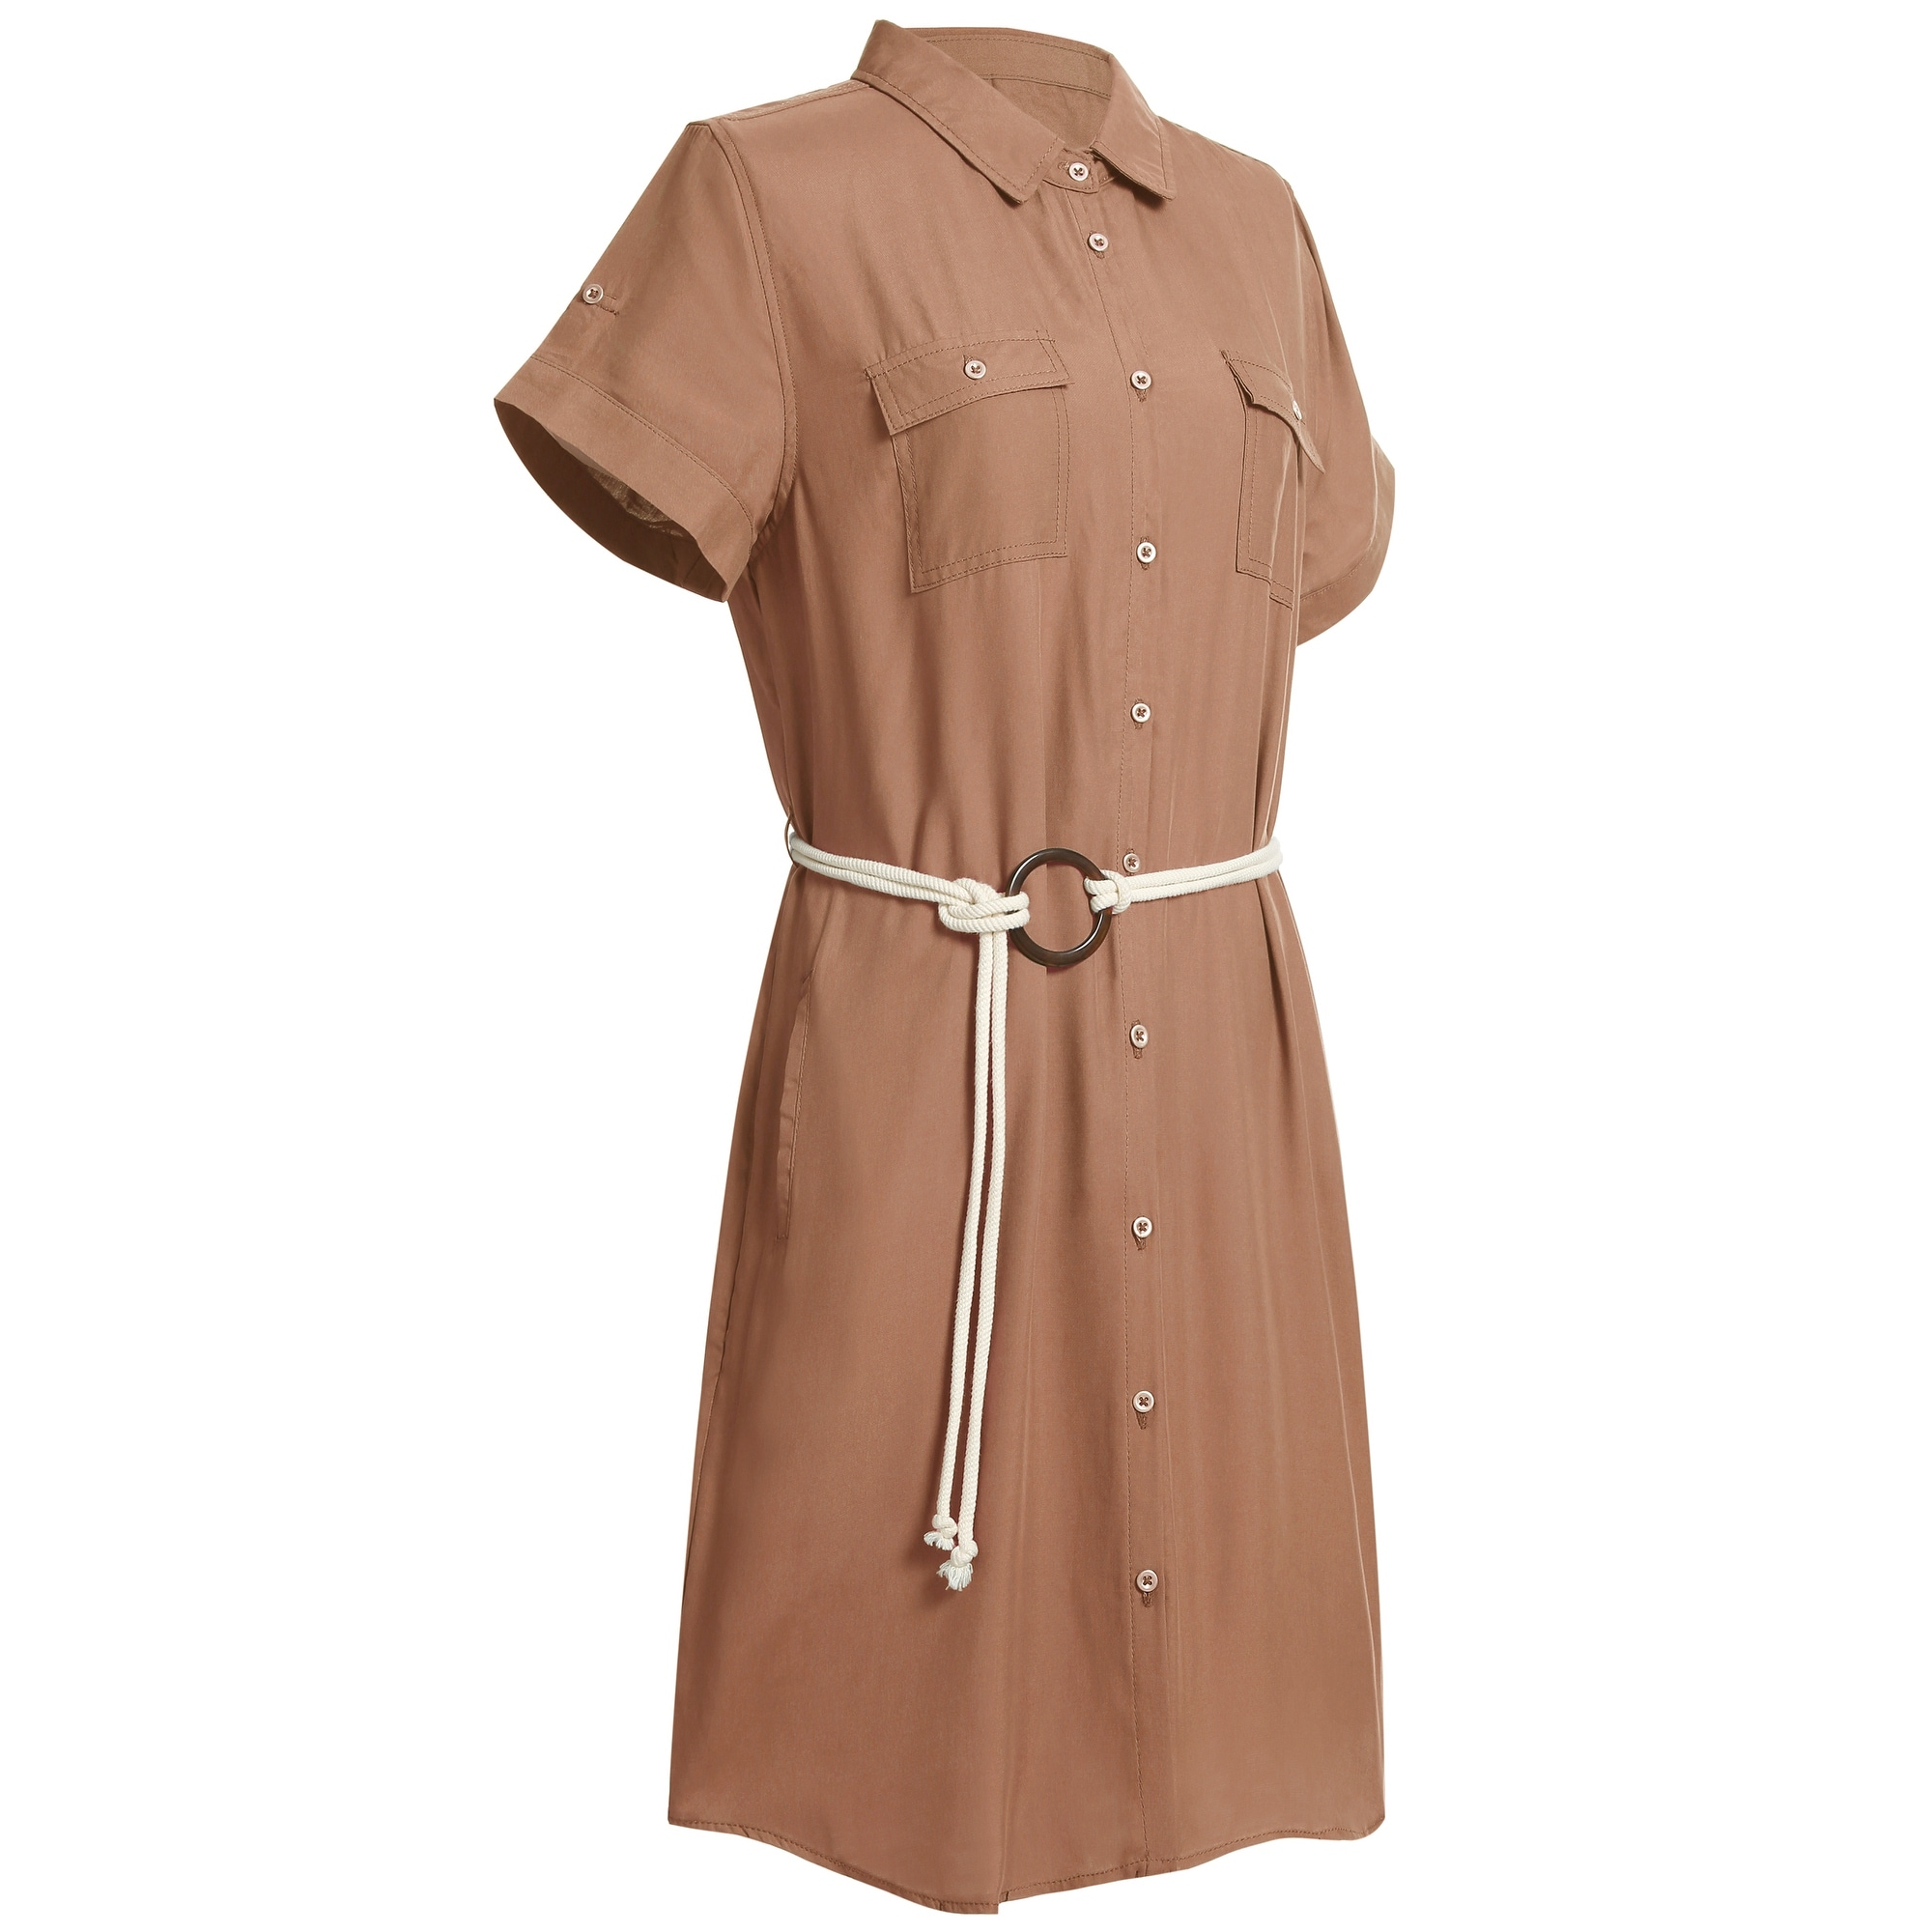 brown midi dress with sleeves